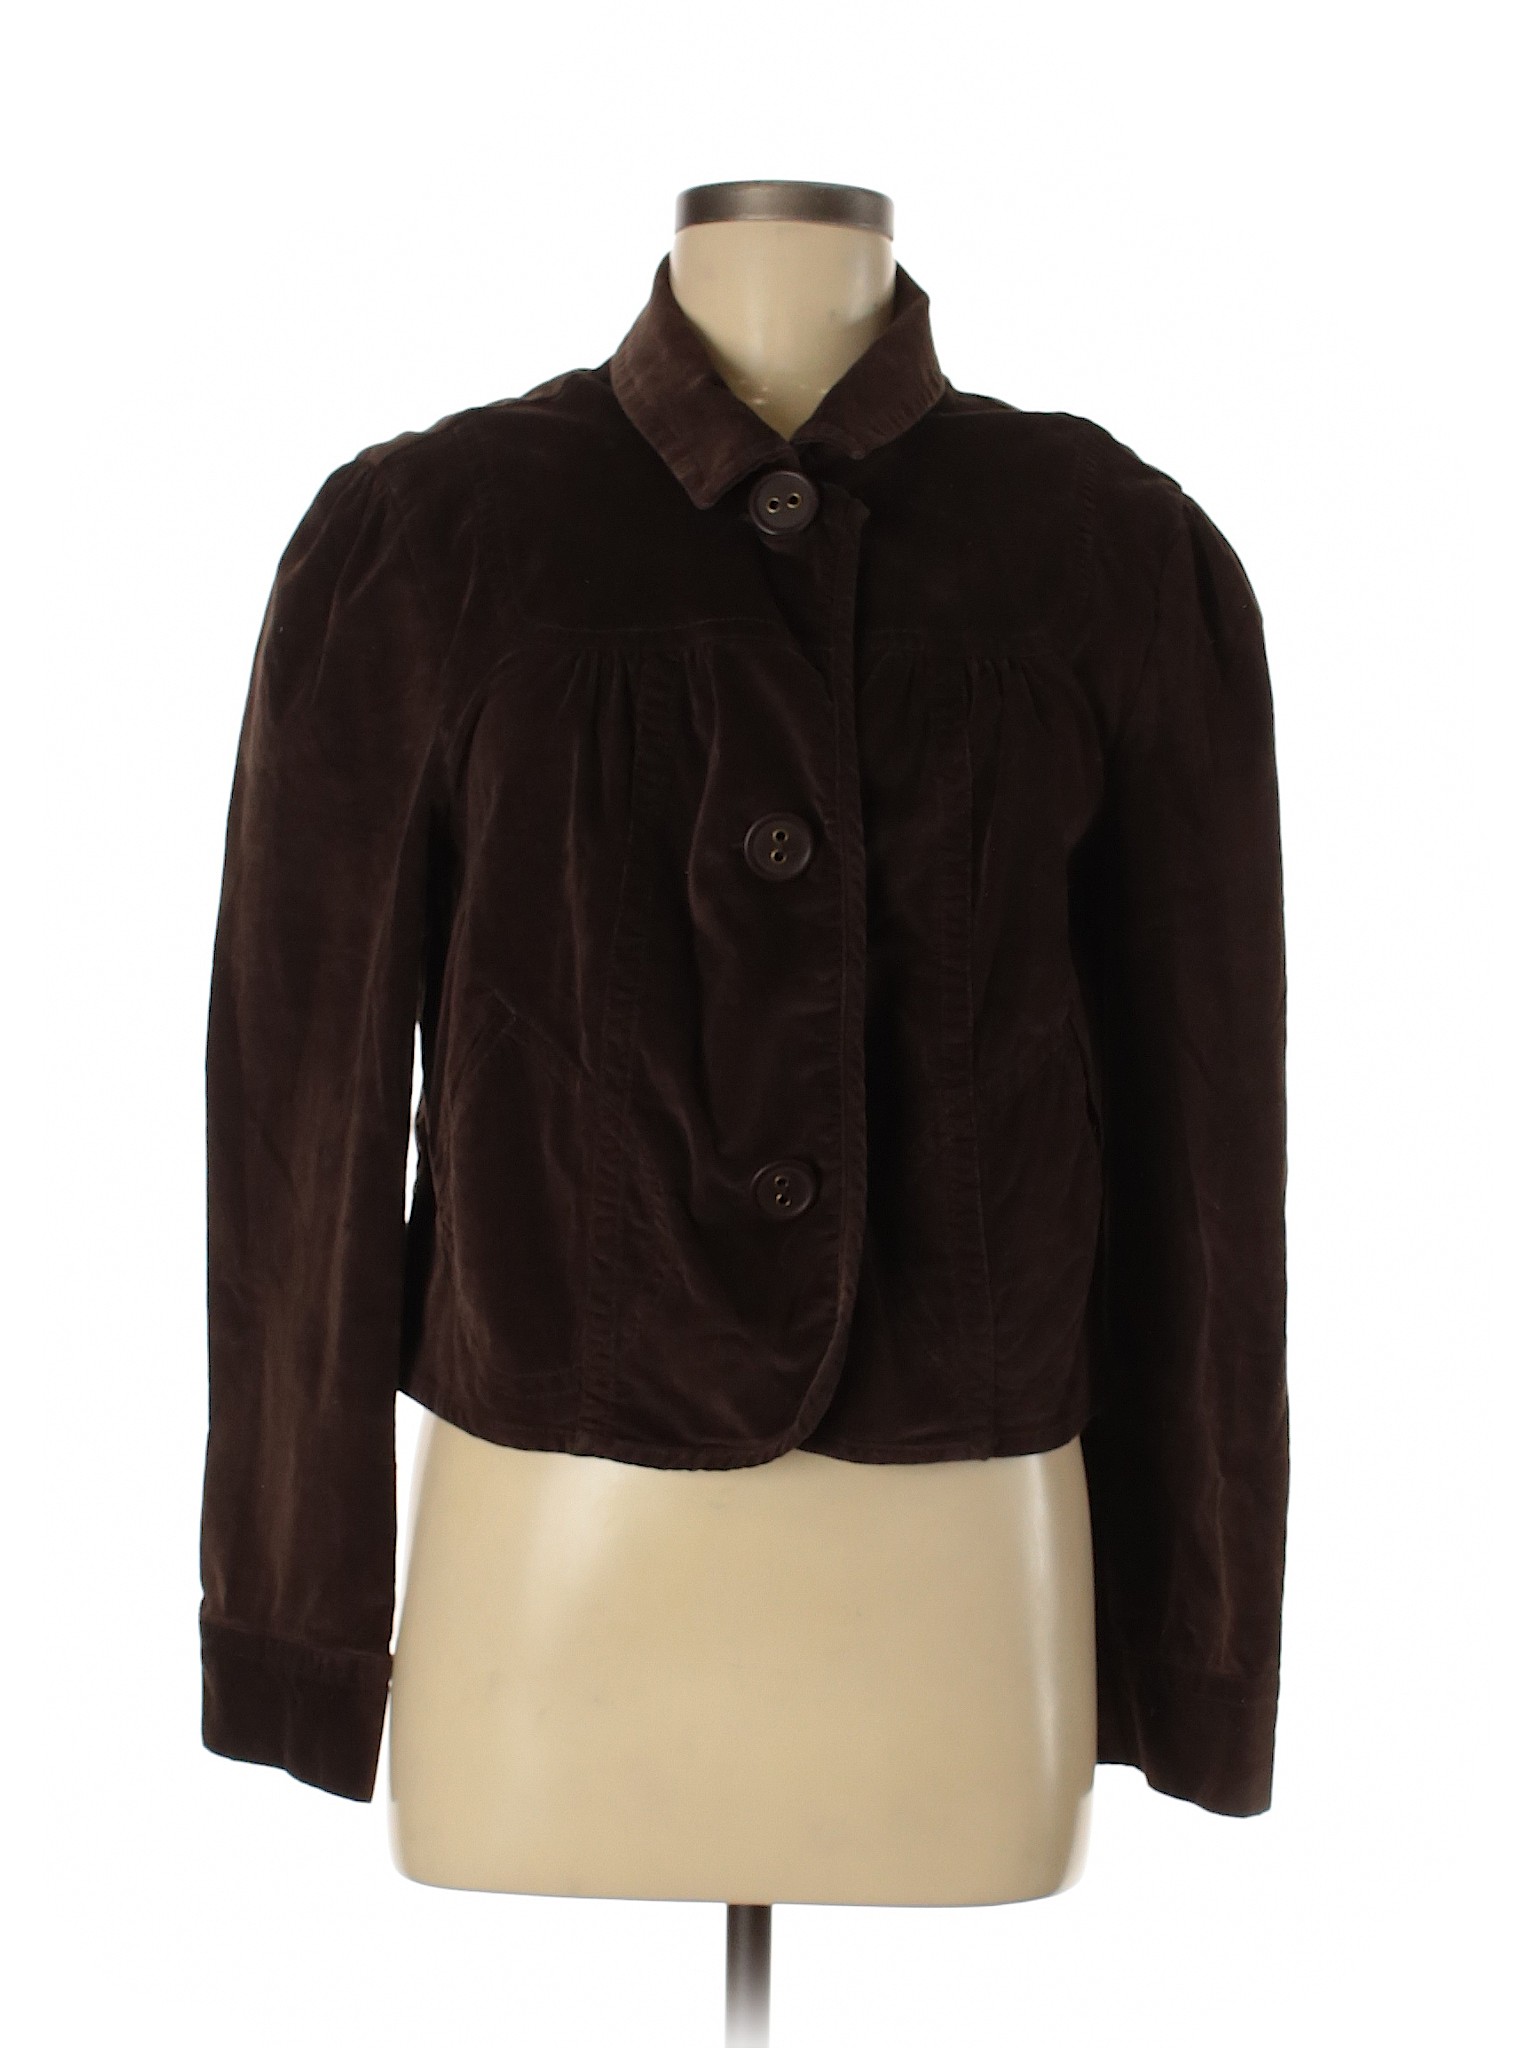 SONOMA life + style Women Brown Jacket M | eBay